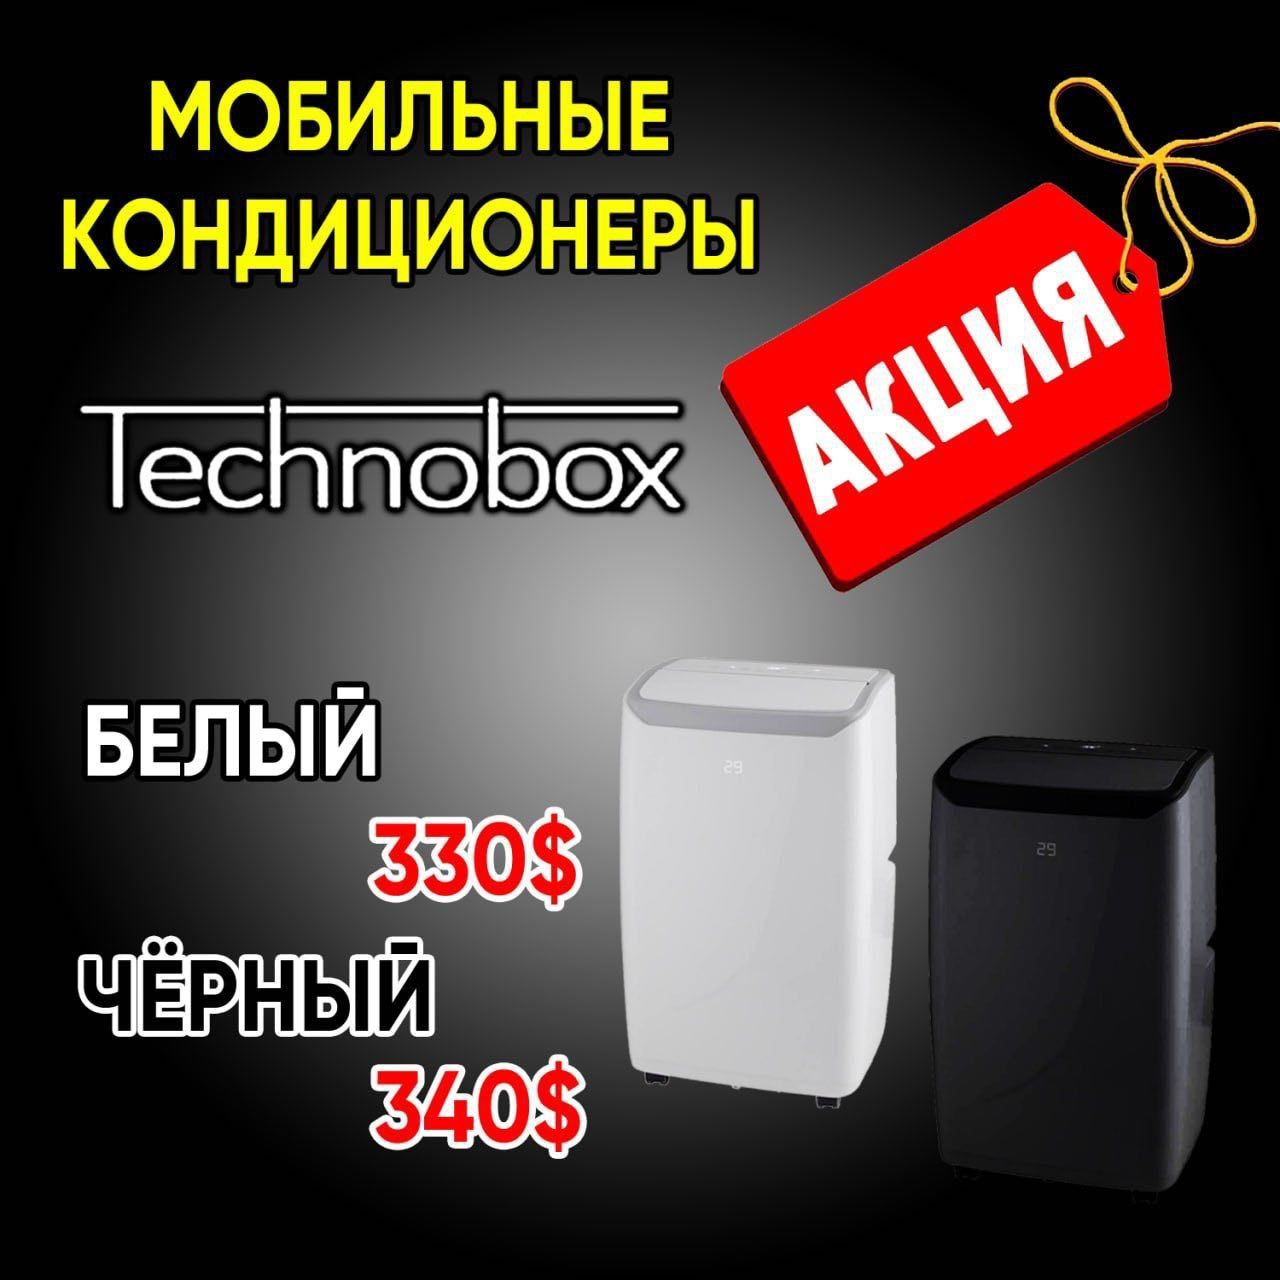 Technobox -12 on/ of wi fi  мобильный кондиционер